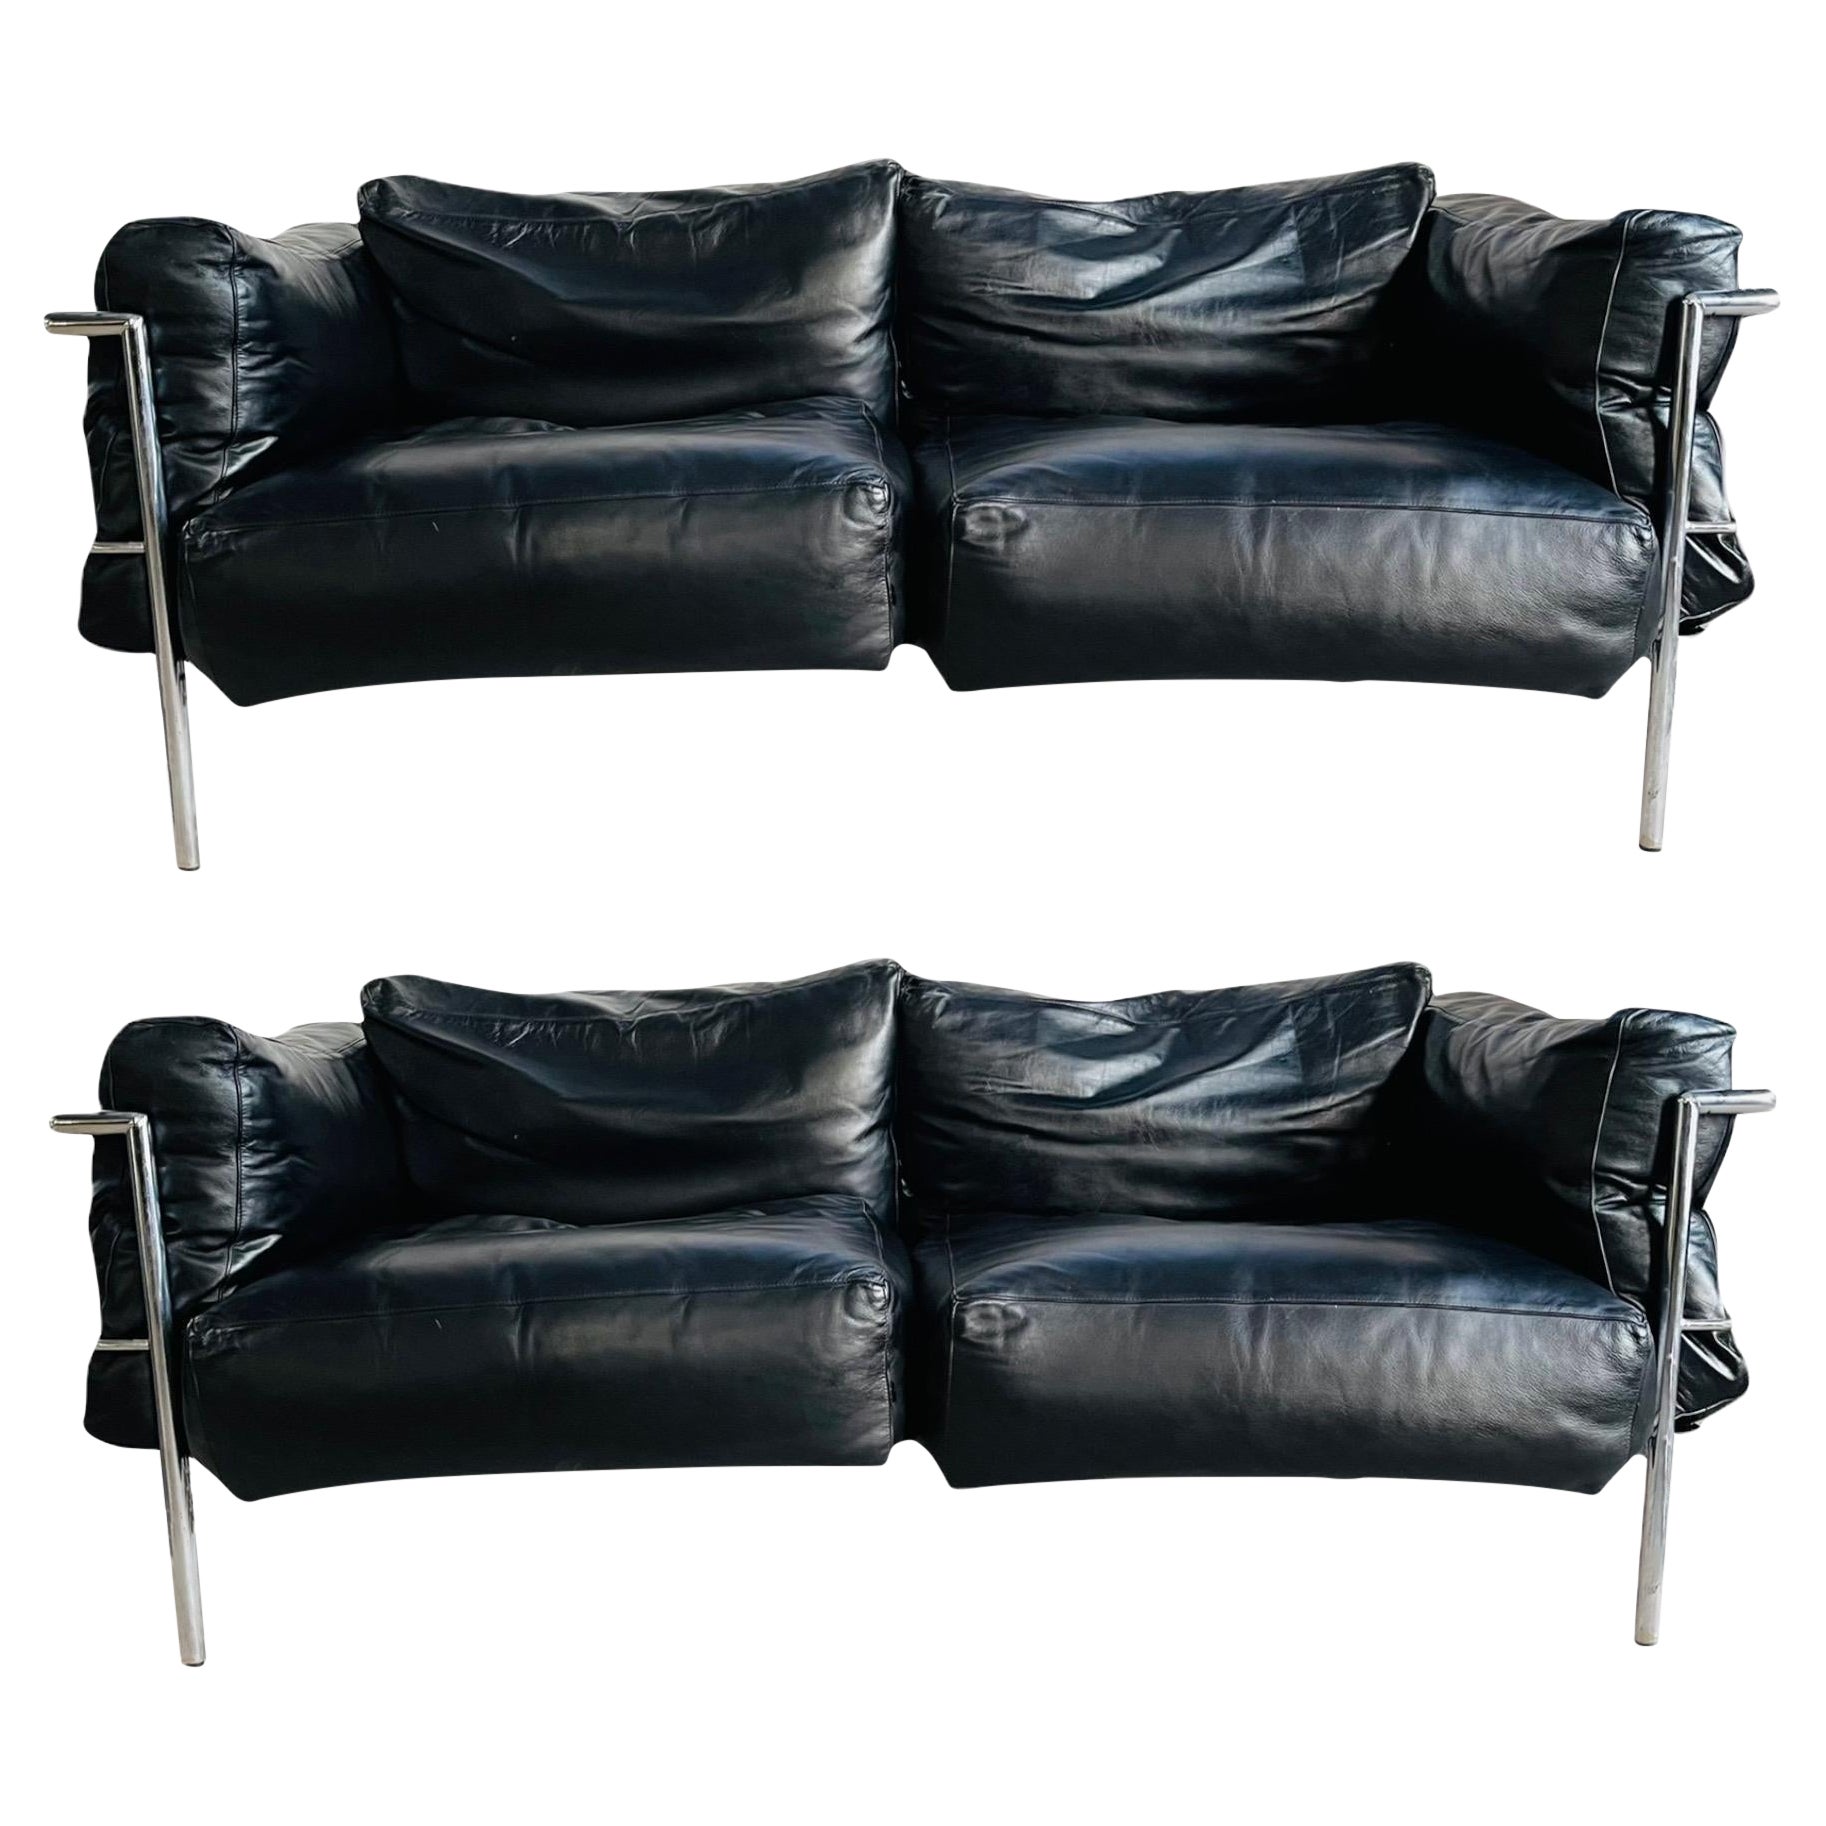 Pair of Italian Le Courbiser LC2 Leather Sofa